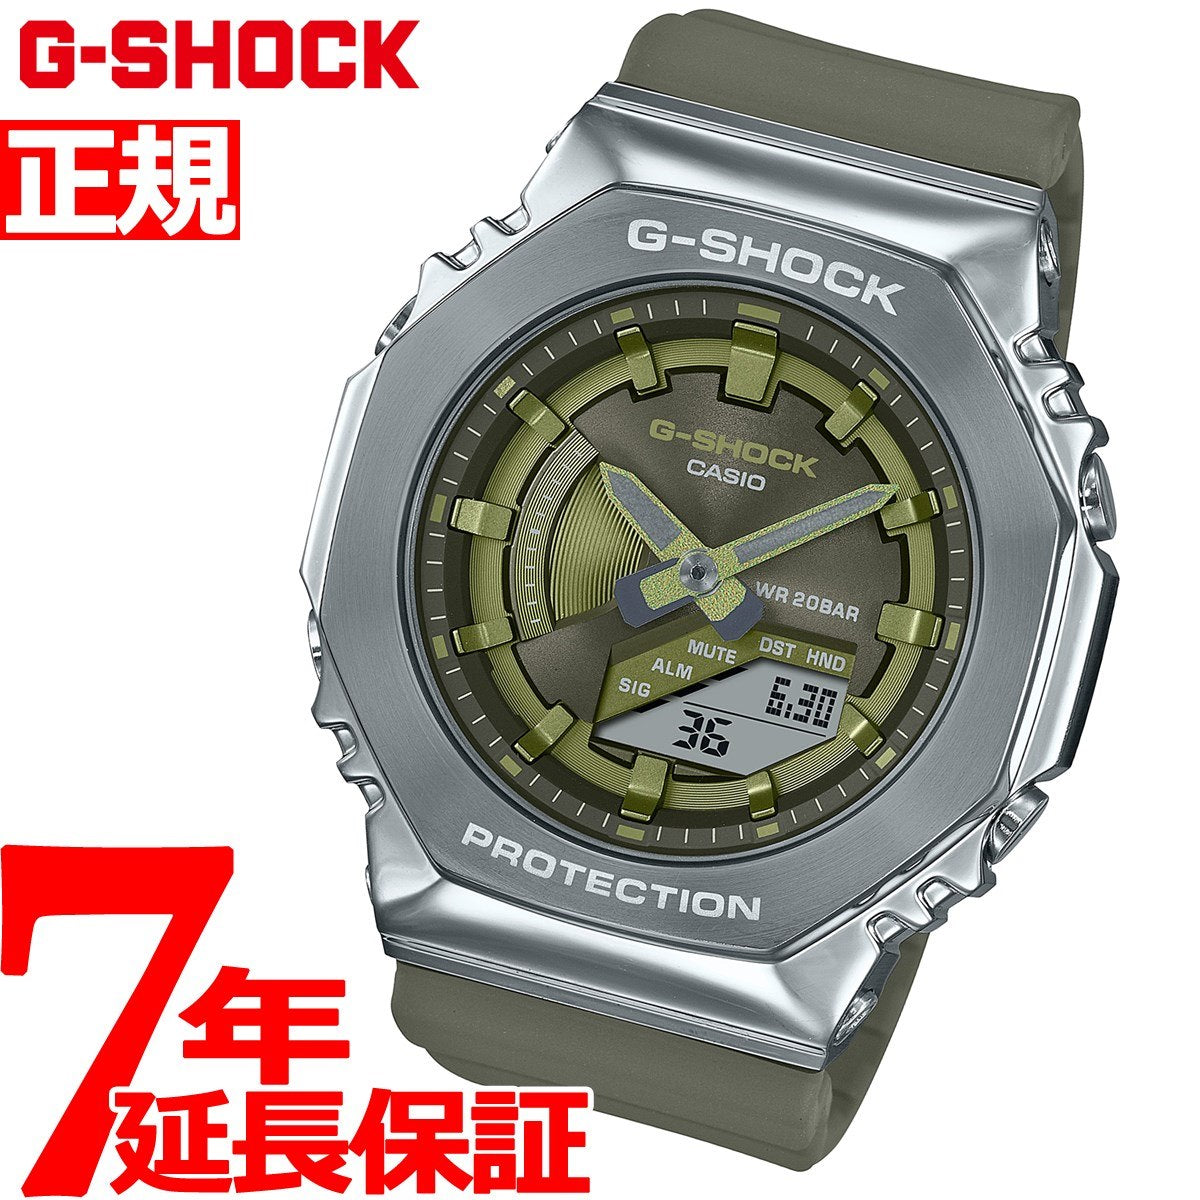 G-SHOCK カシオ Gショック CASIO 限定モデル 腕時計 メンズ レディース